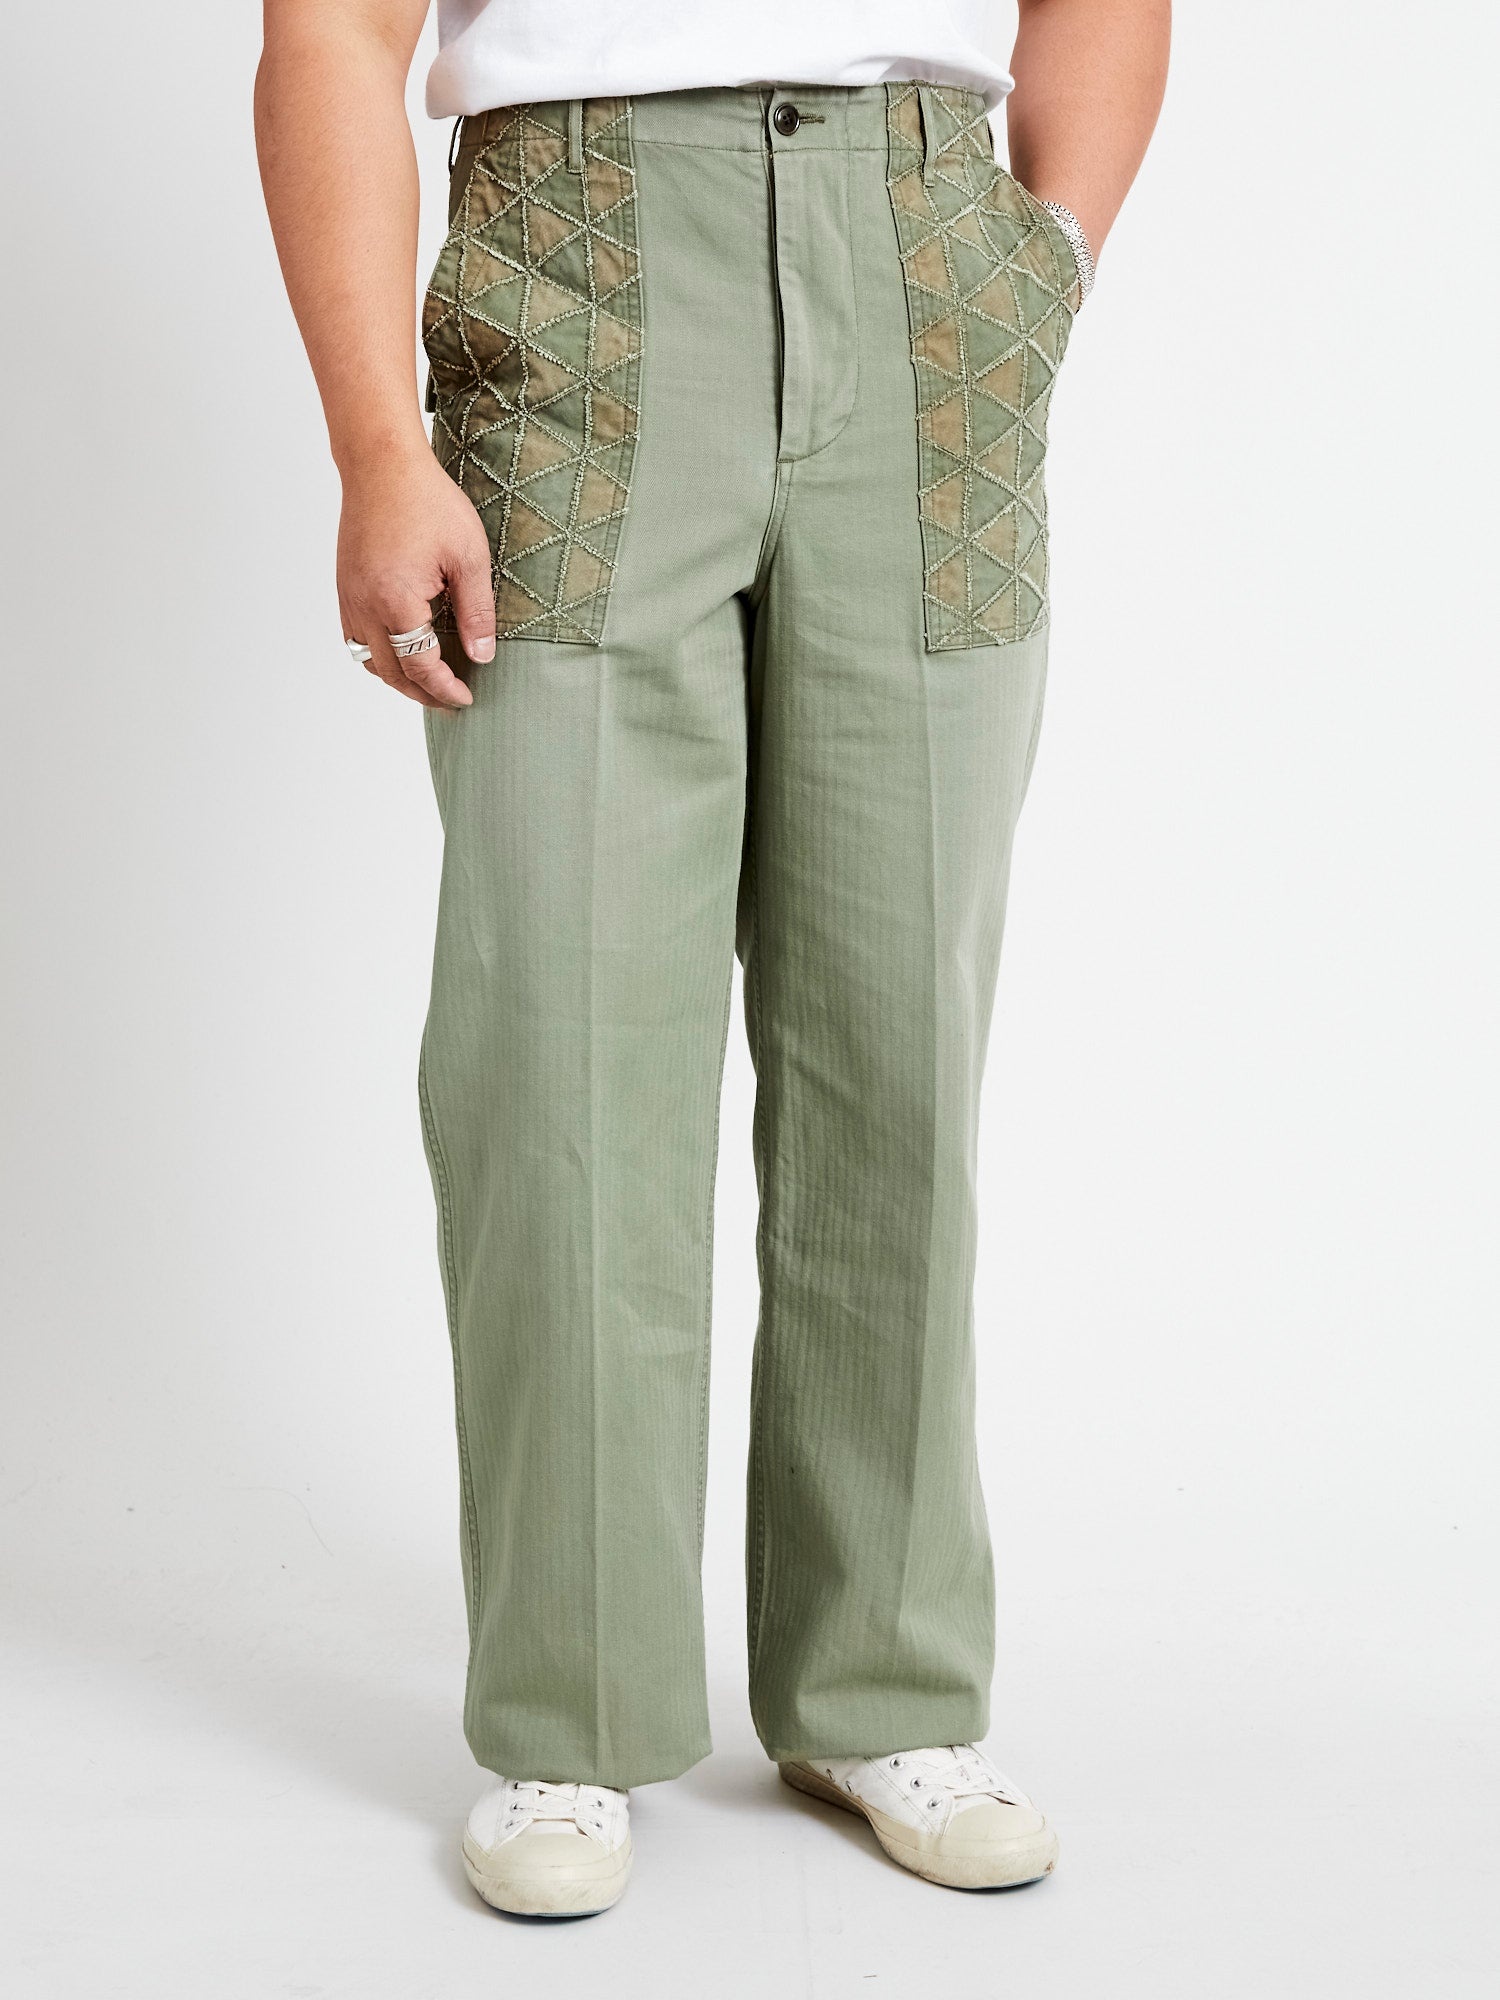 MSP-1014 Tsugihagi Baker Pants in Army Green - 2